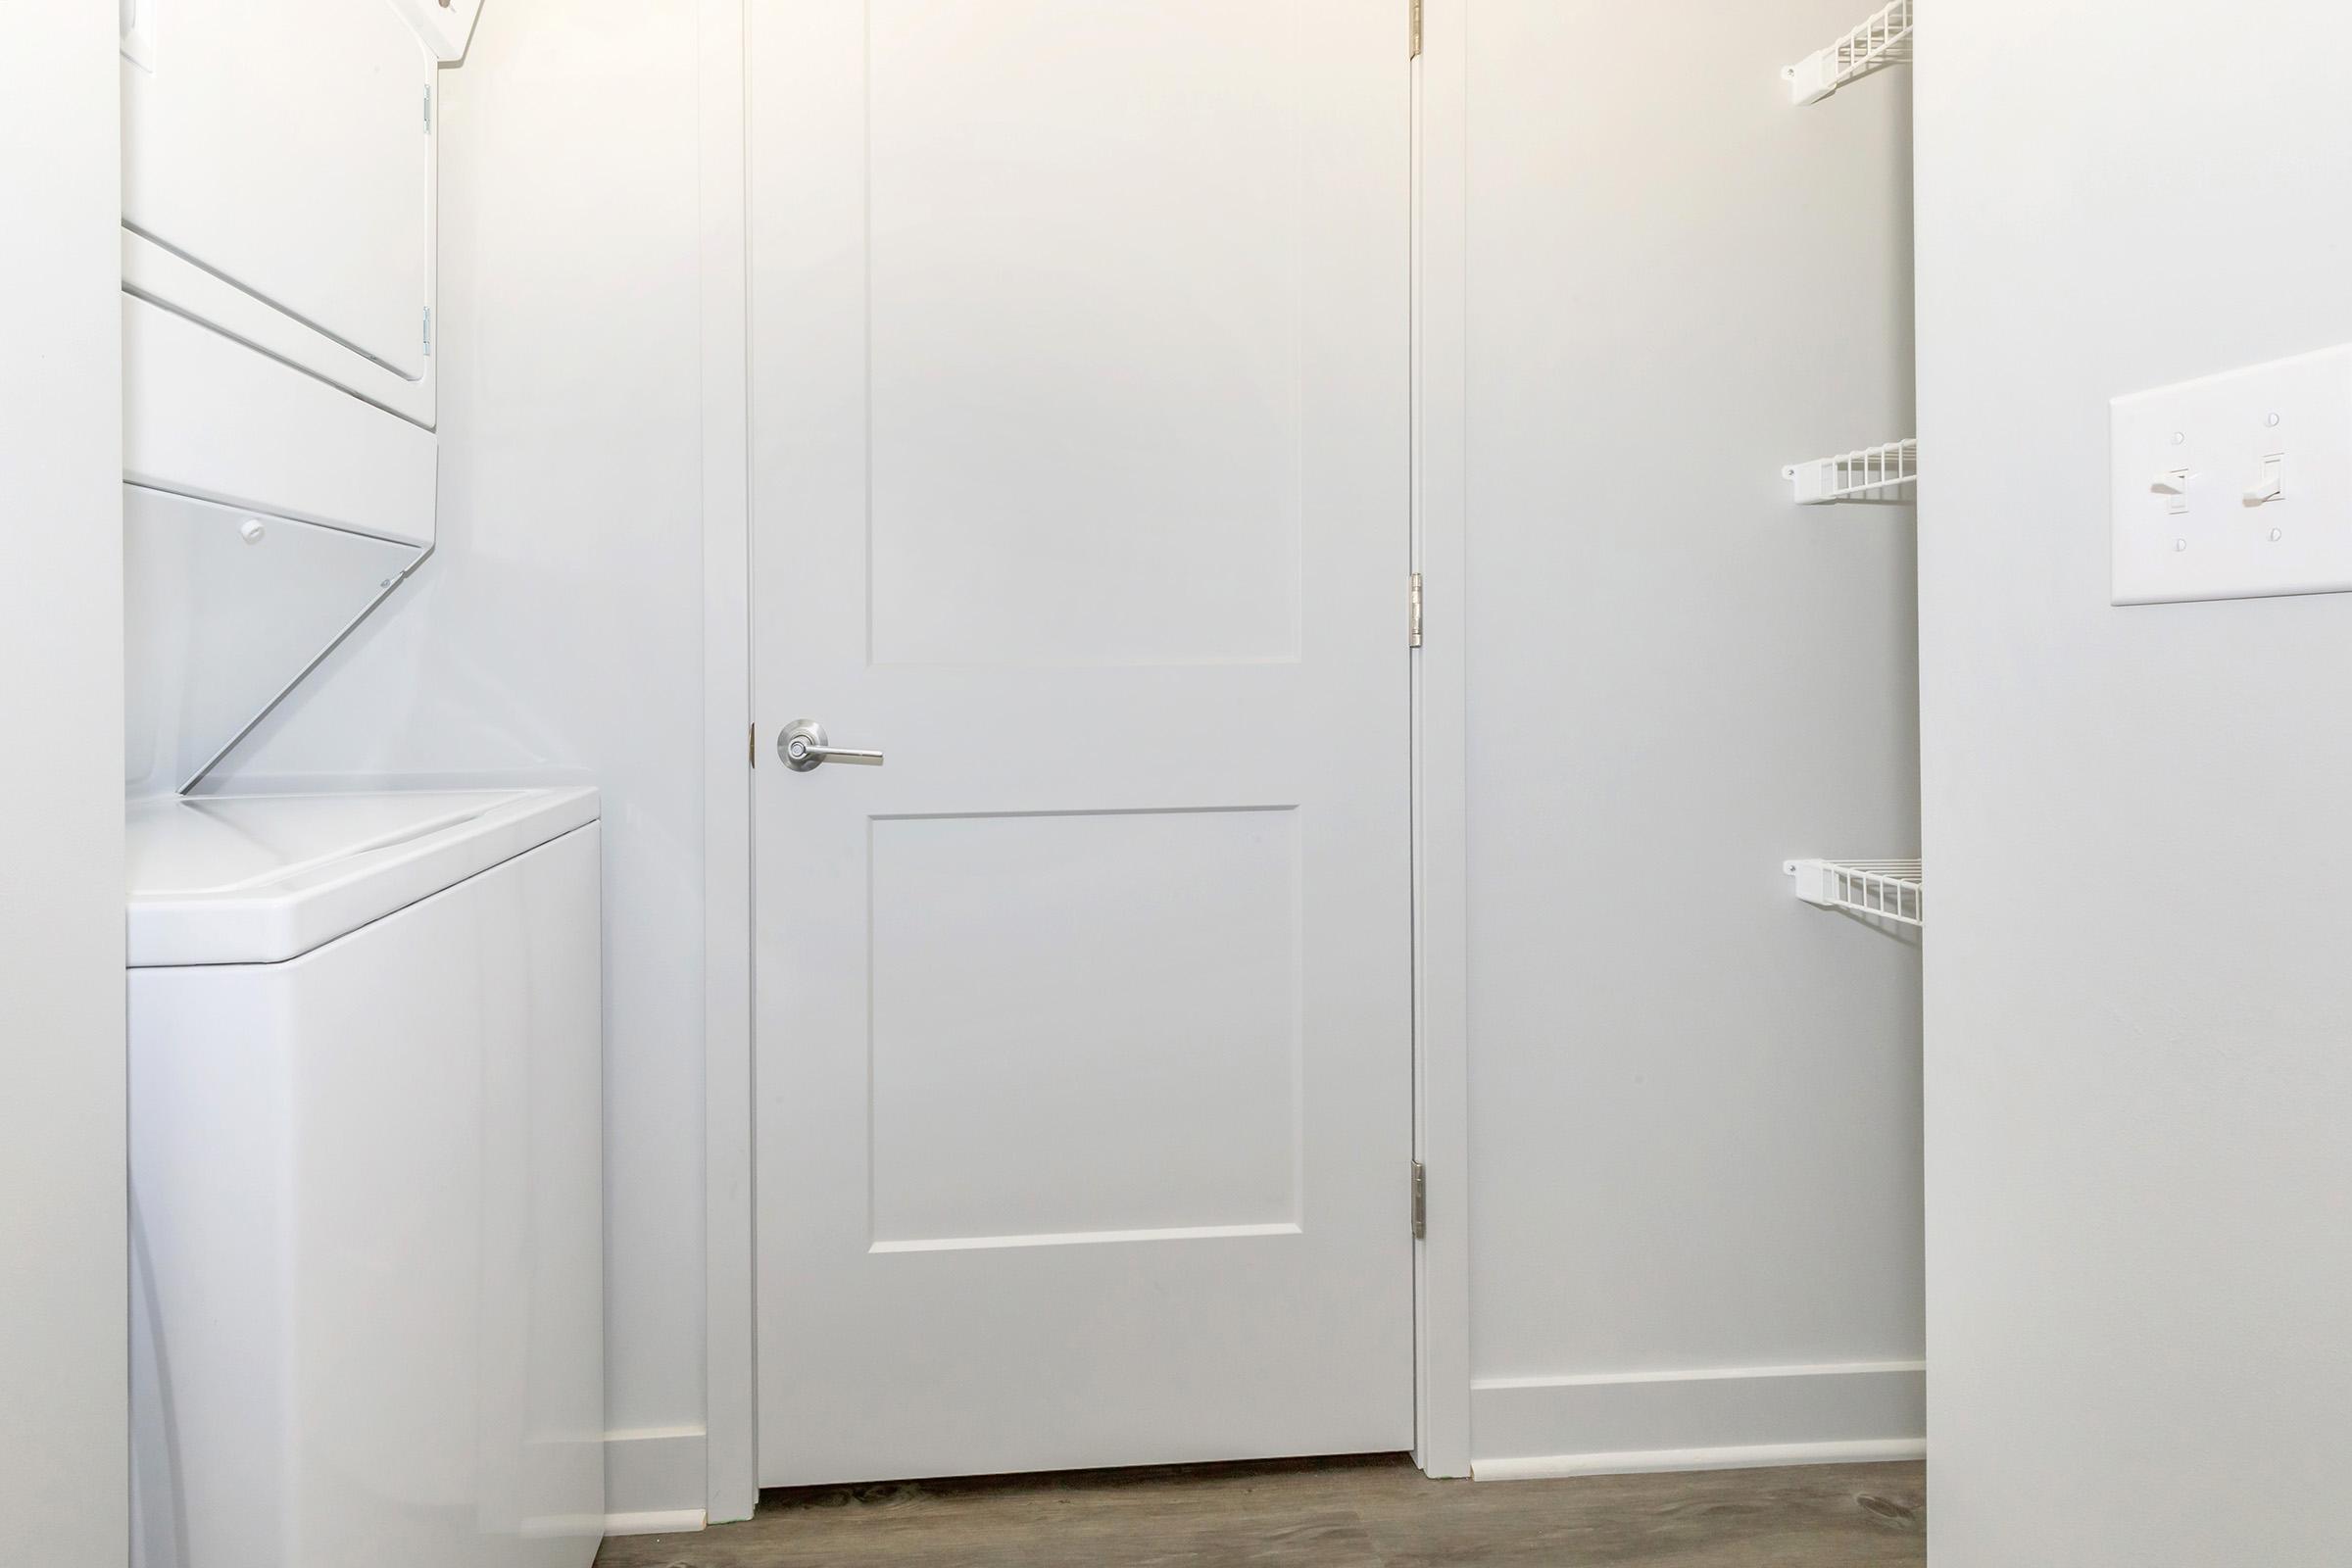 a refrigerator in a kitchen